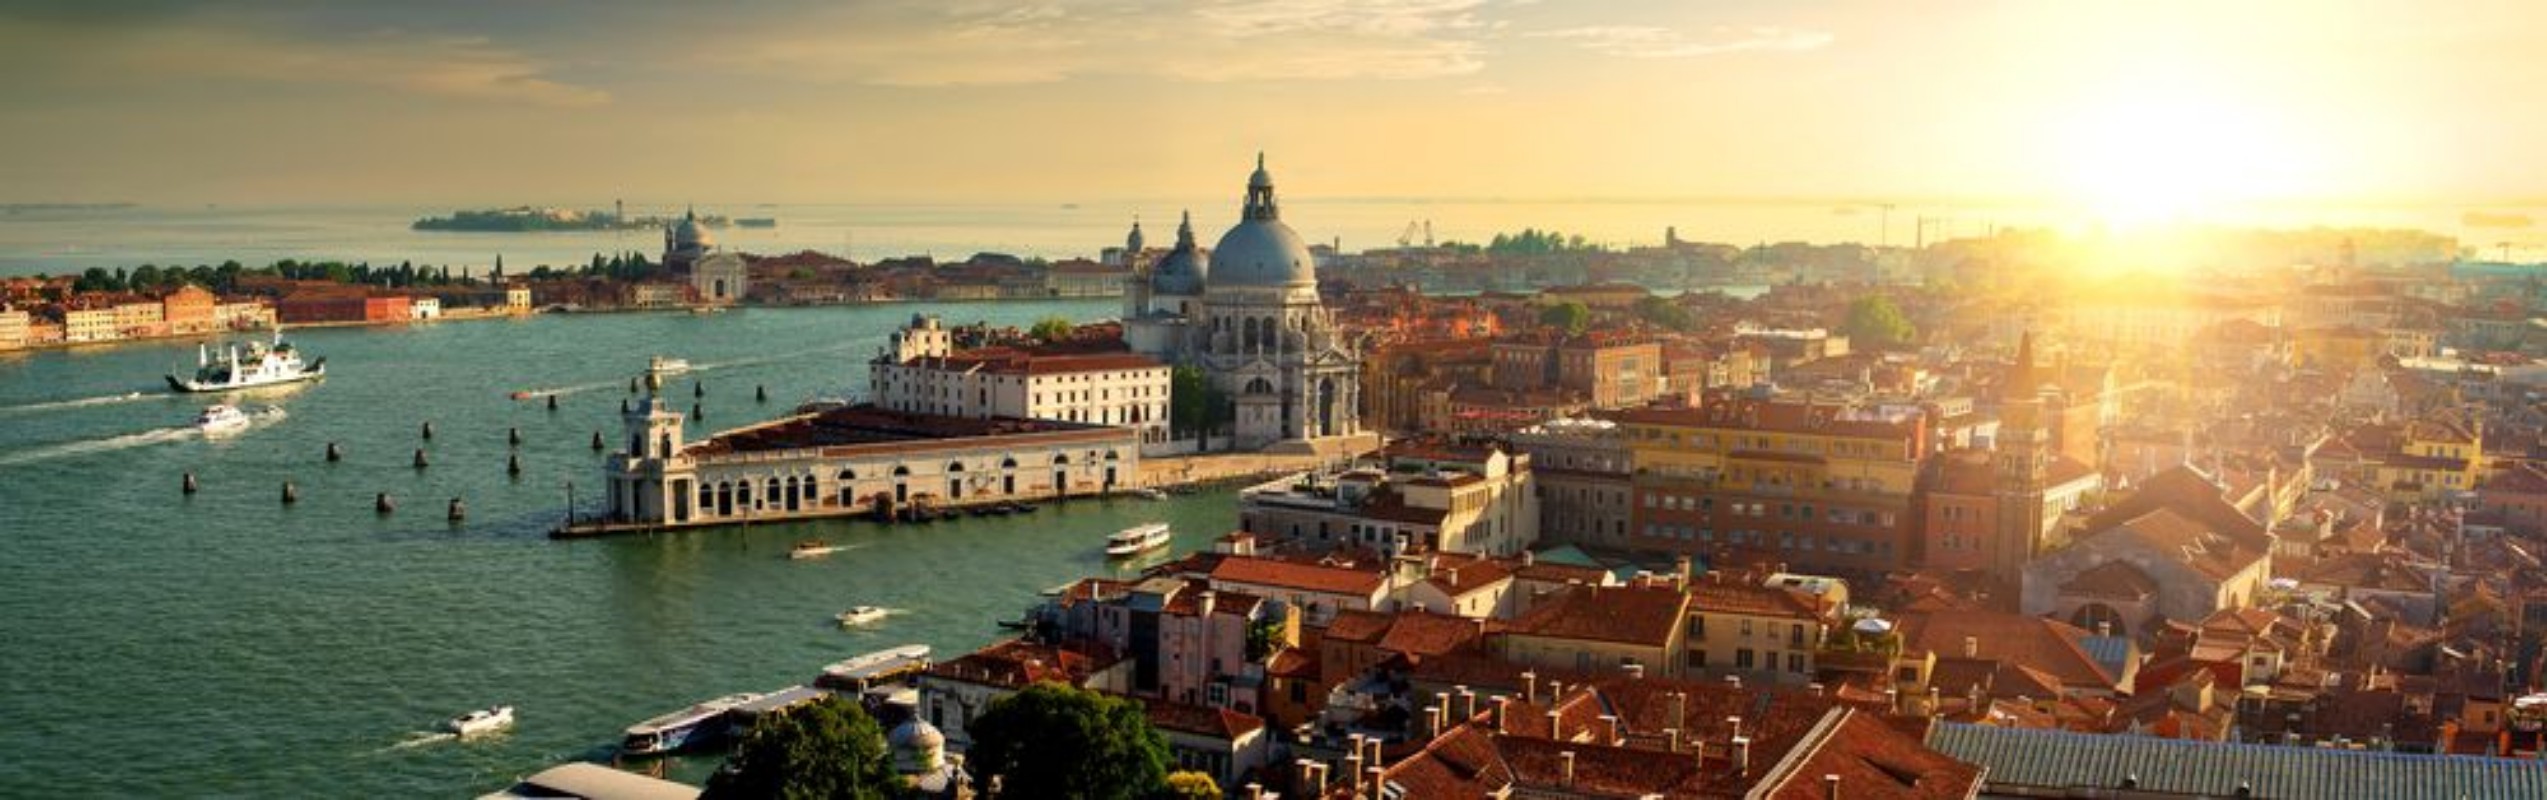 Image de Top view of Venice